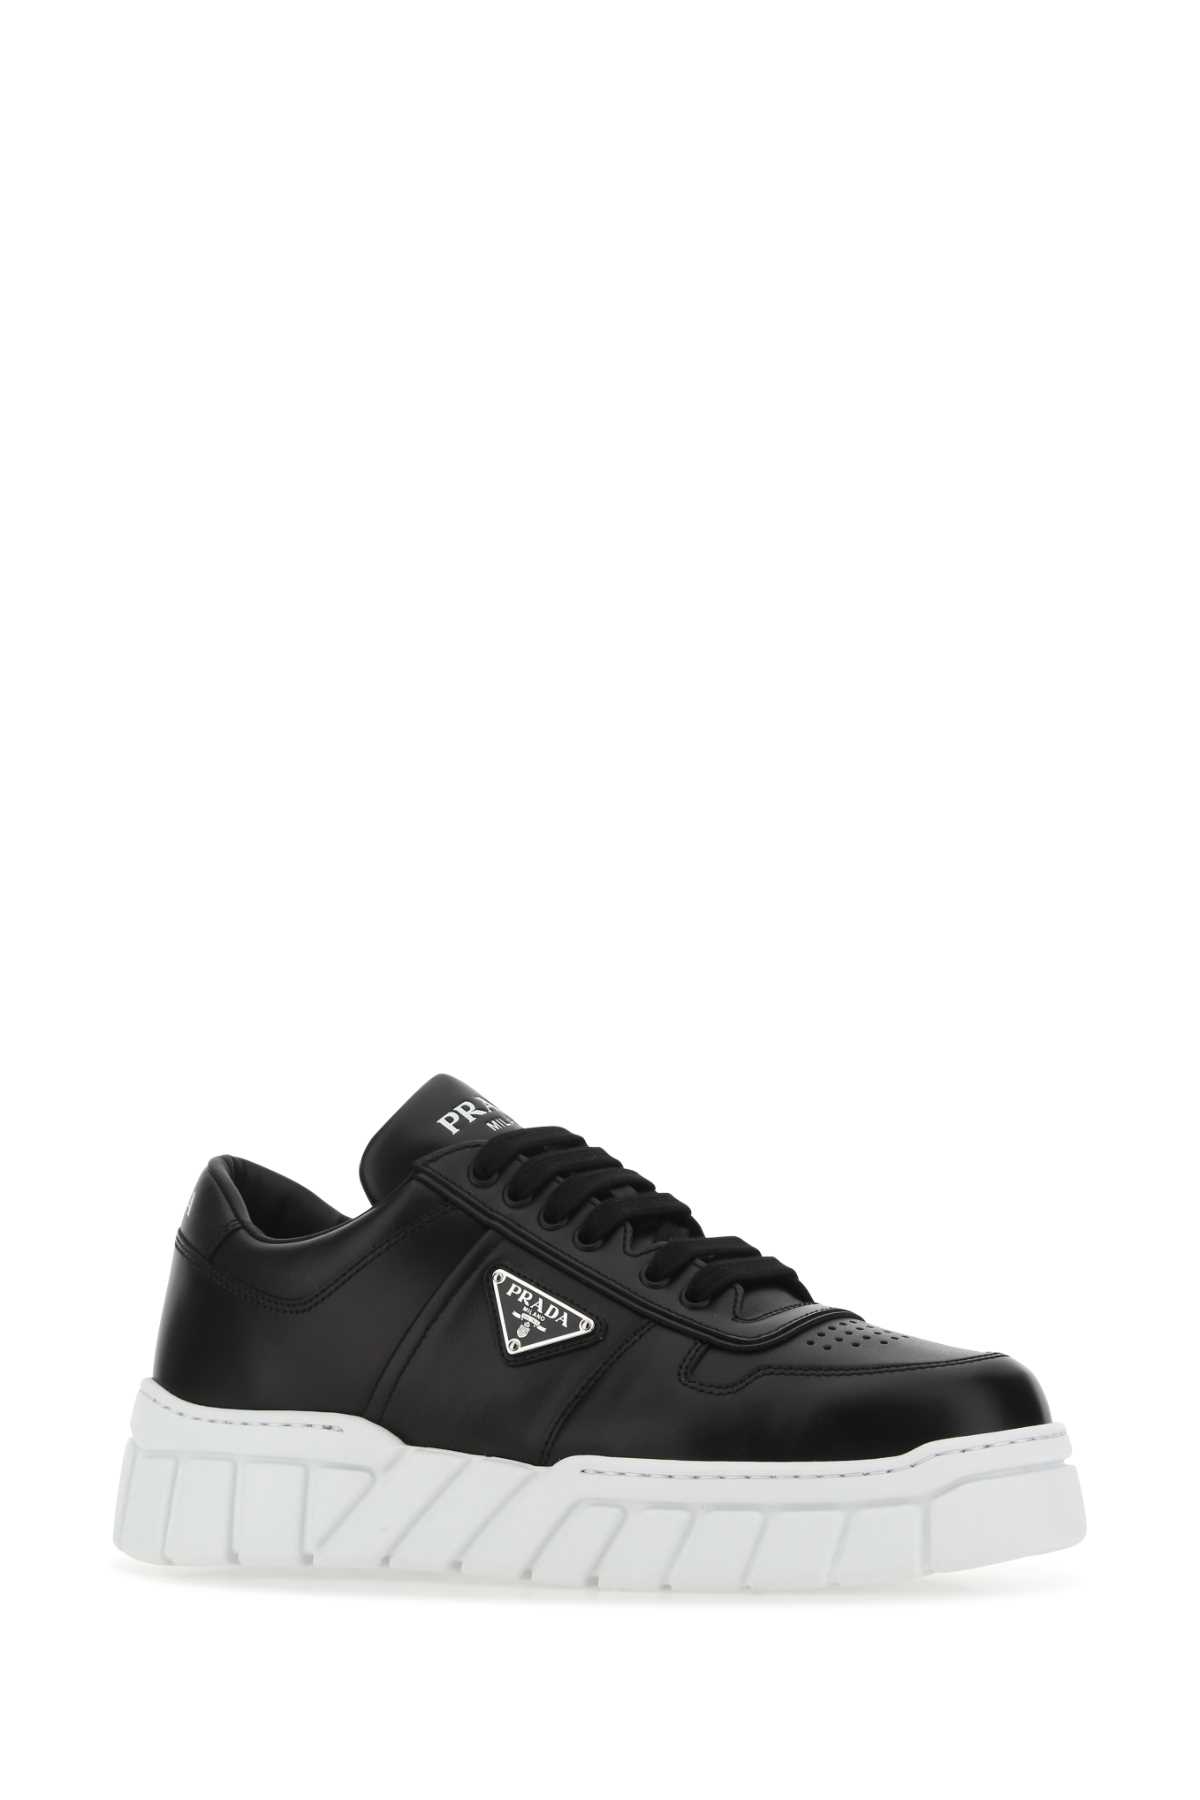 Shop Prada Black Leather Sneakers In F0632